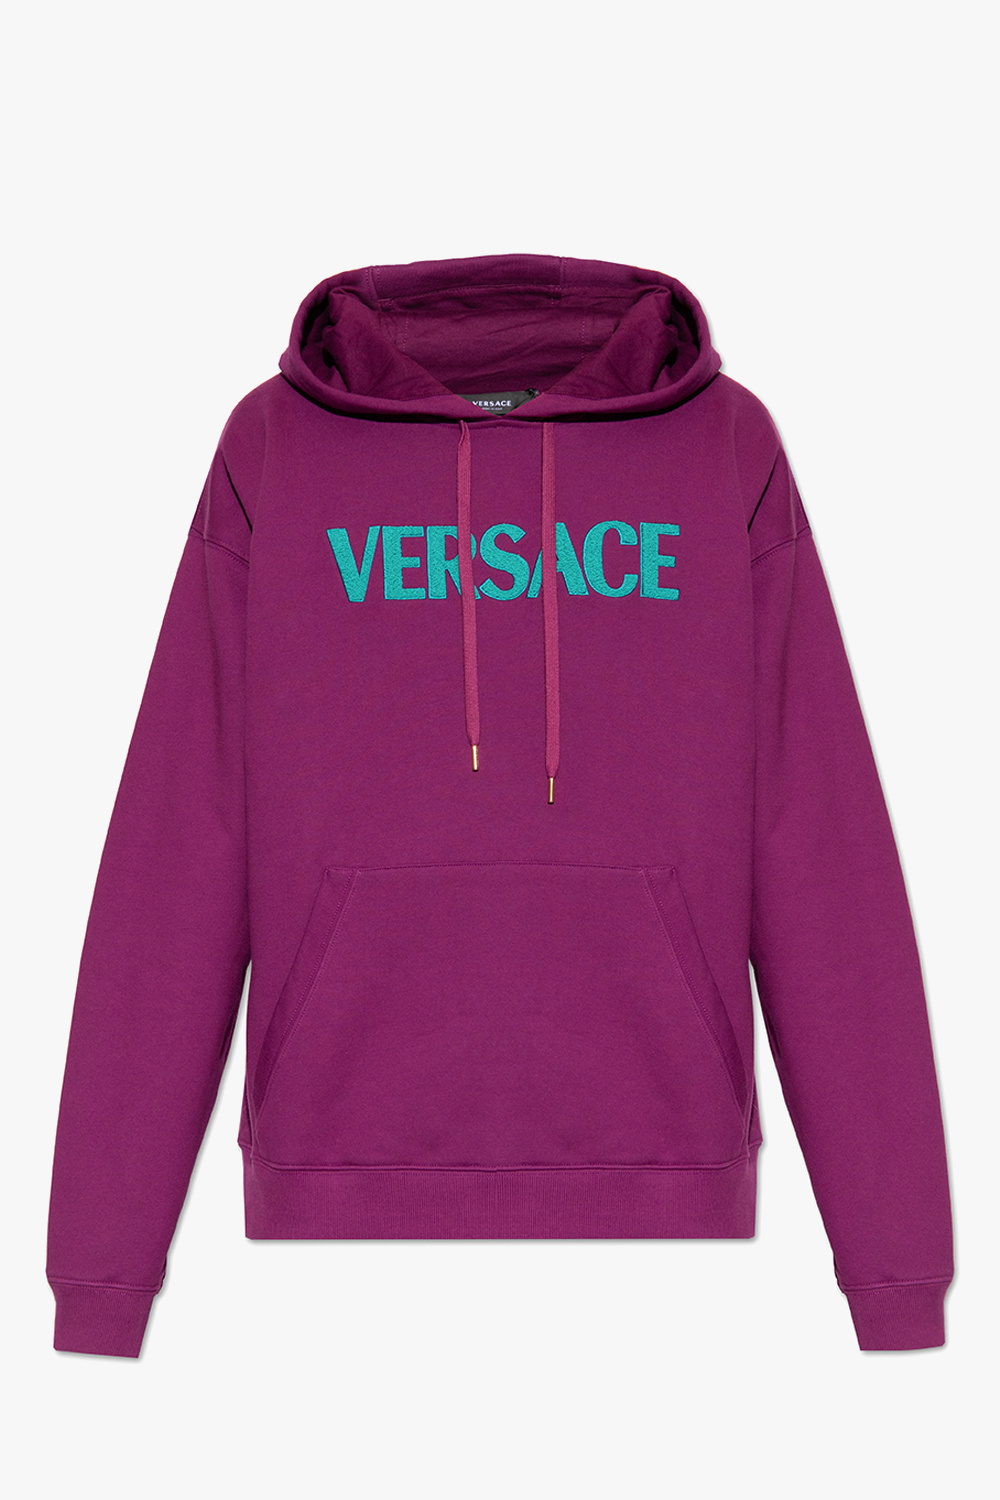 Versace womens sports clothing tshirts singlets all